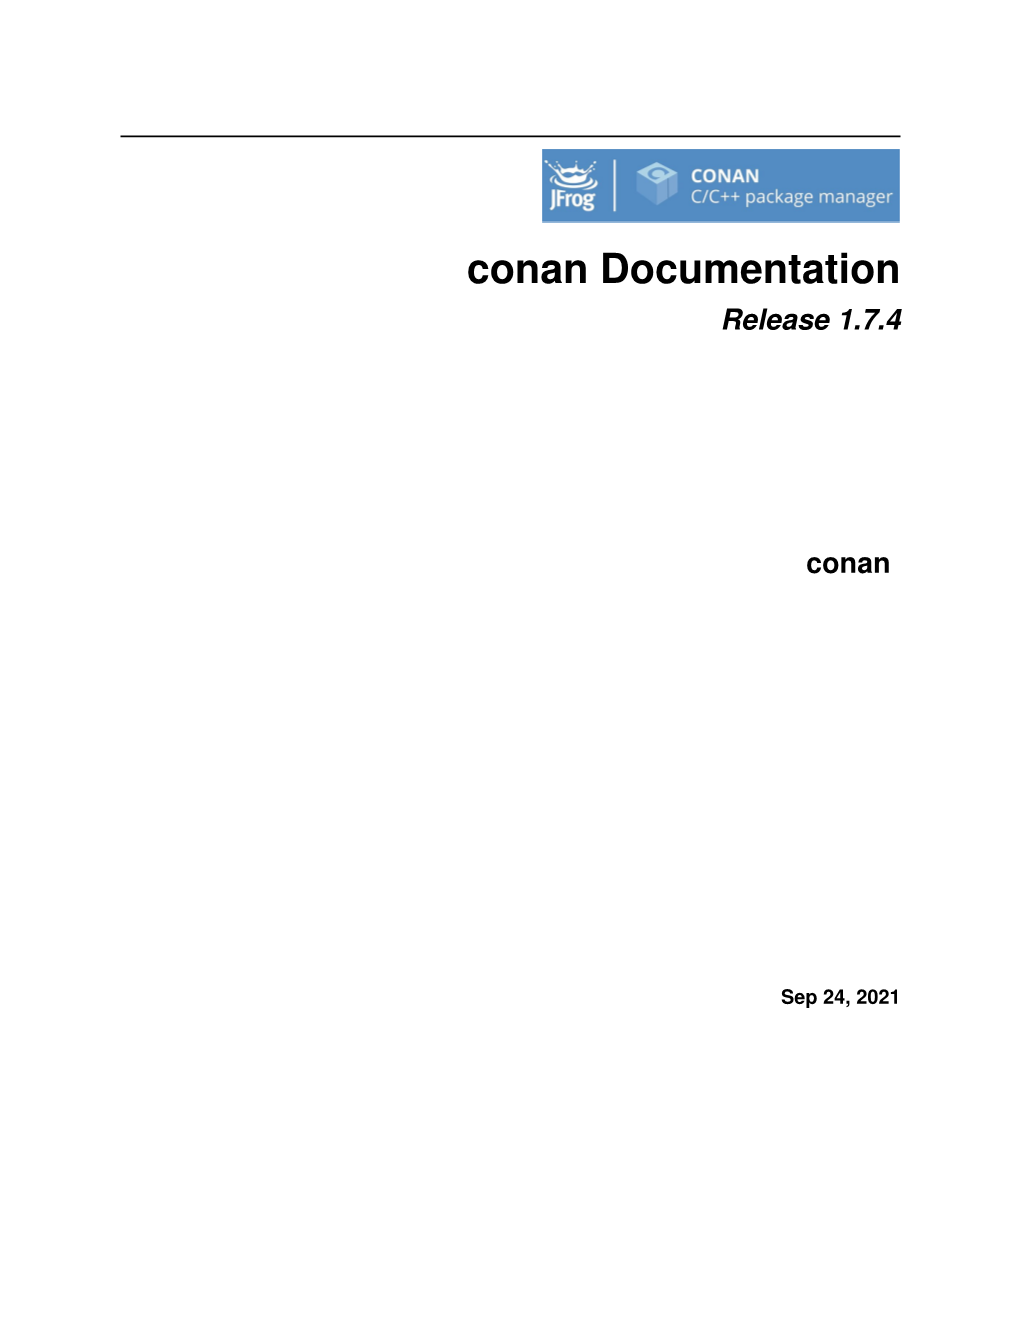 Conan Documentation Release 1.7.4